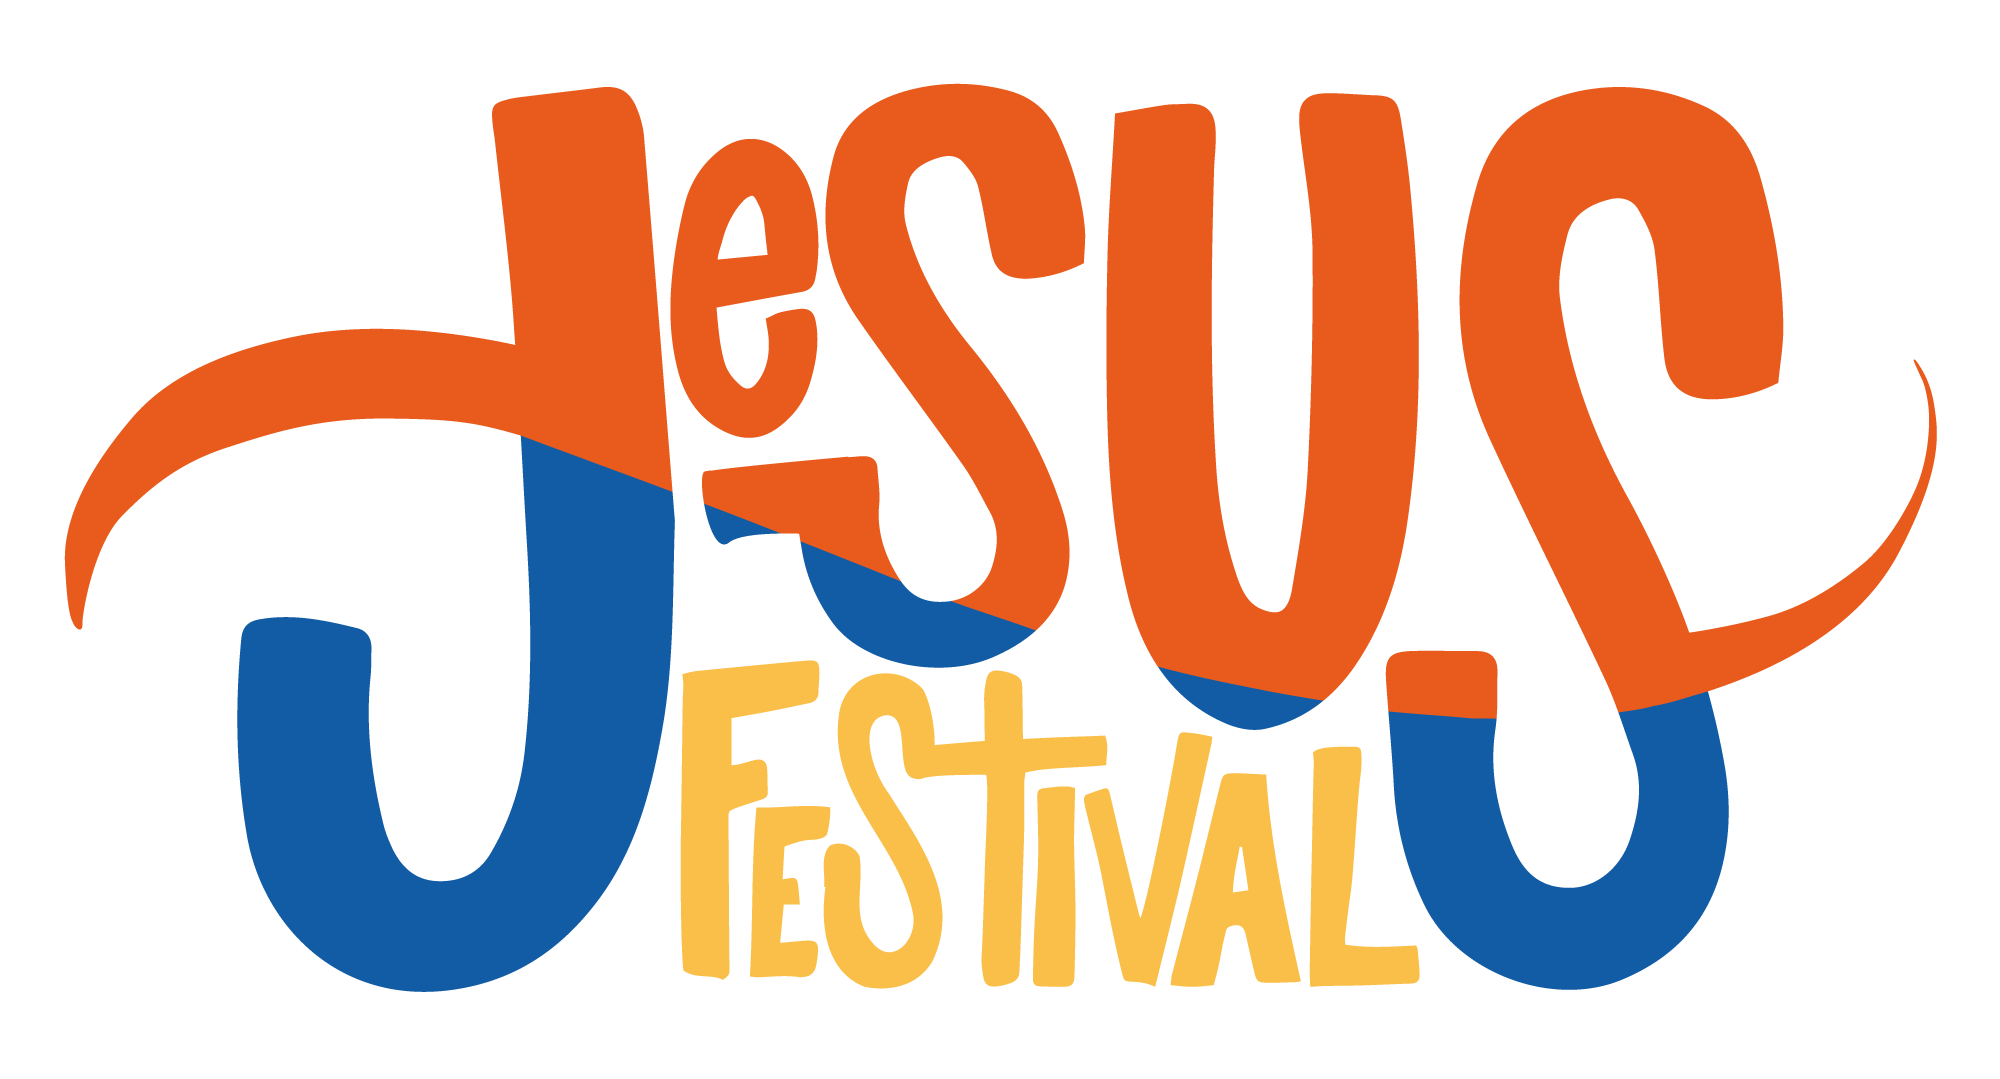 Jesus Festival